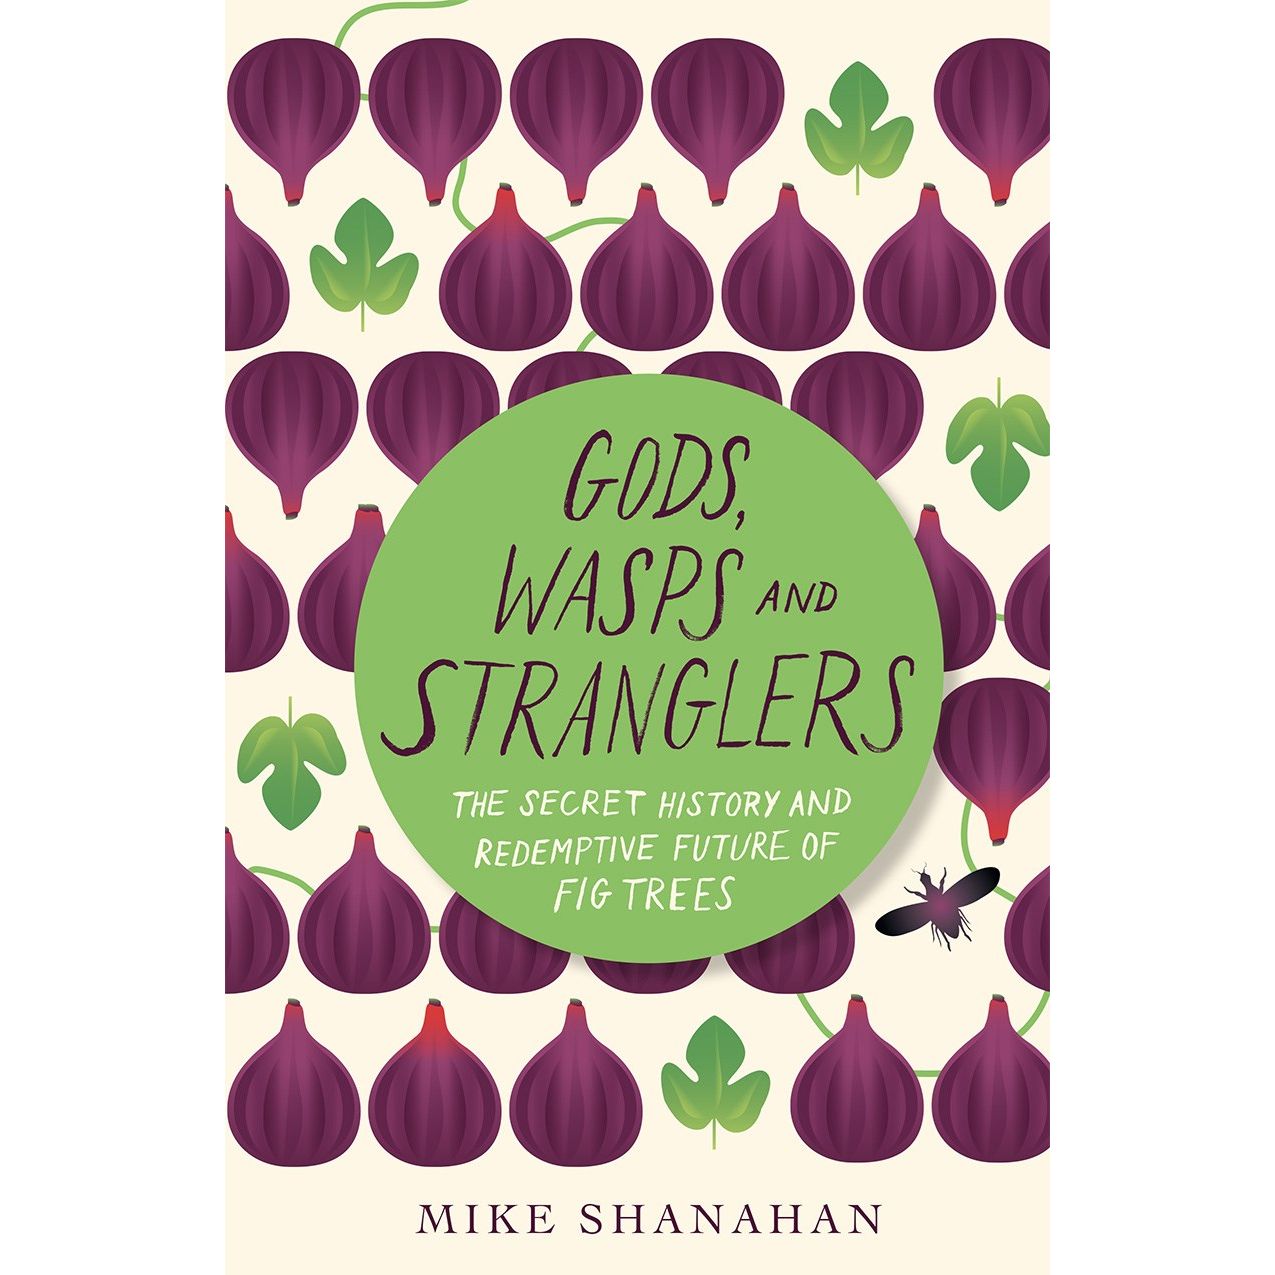 Gods, Wasps and Stranglers (Mike Shanahan)